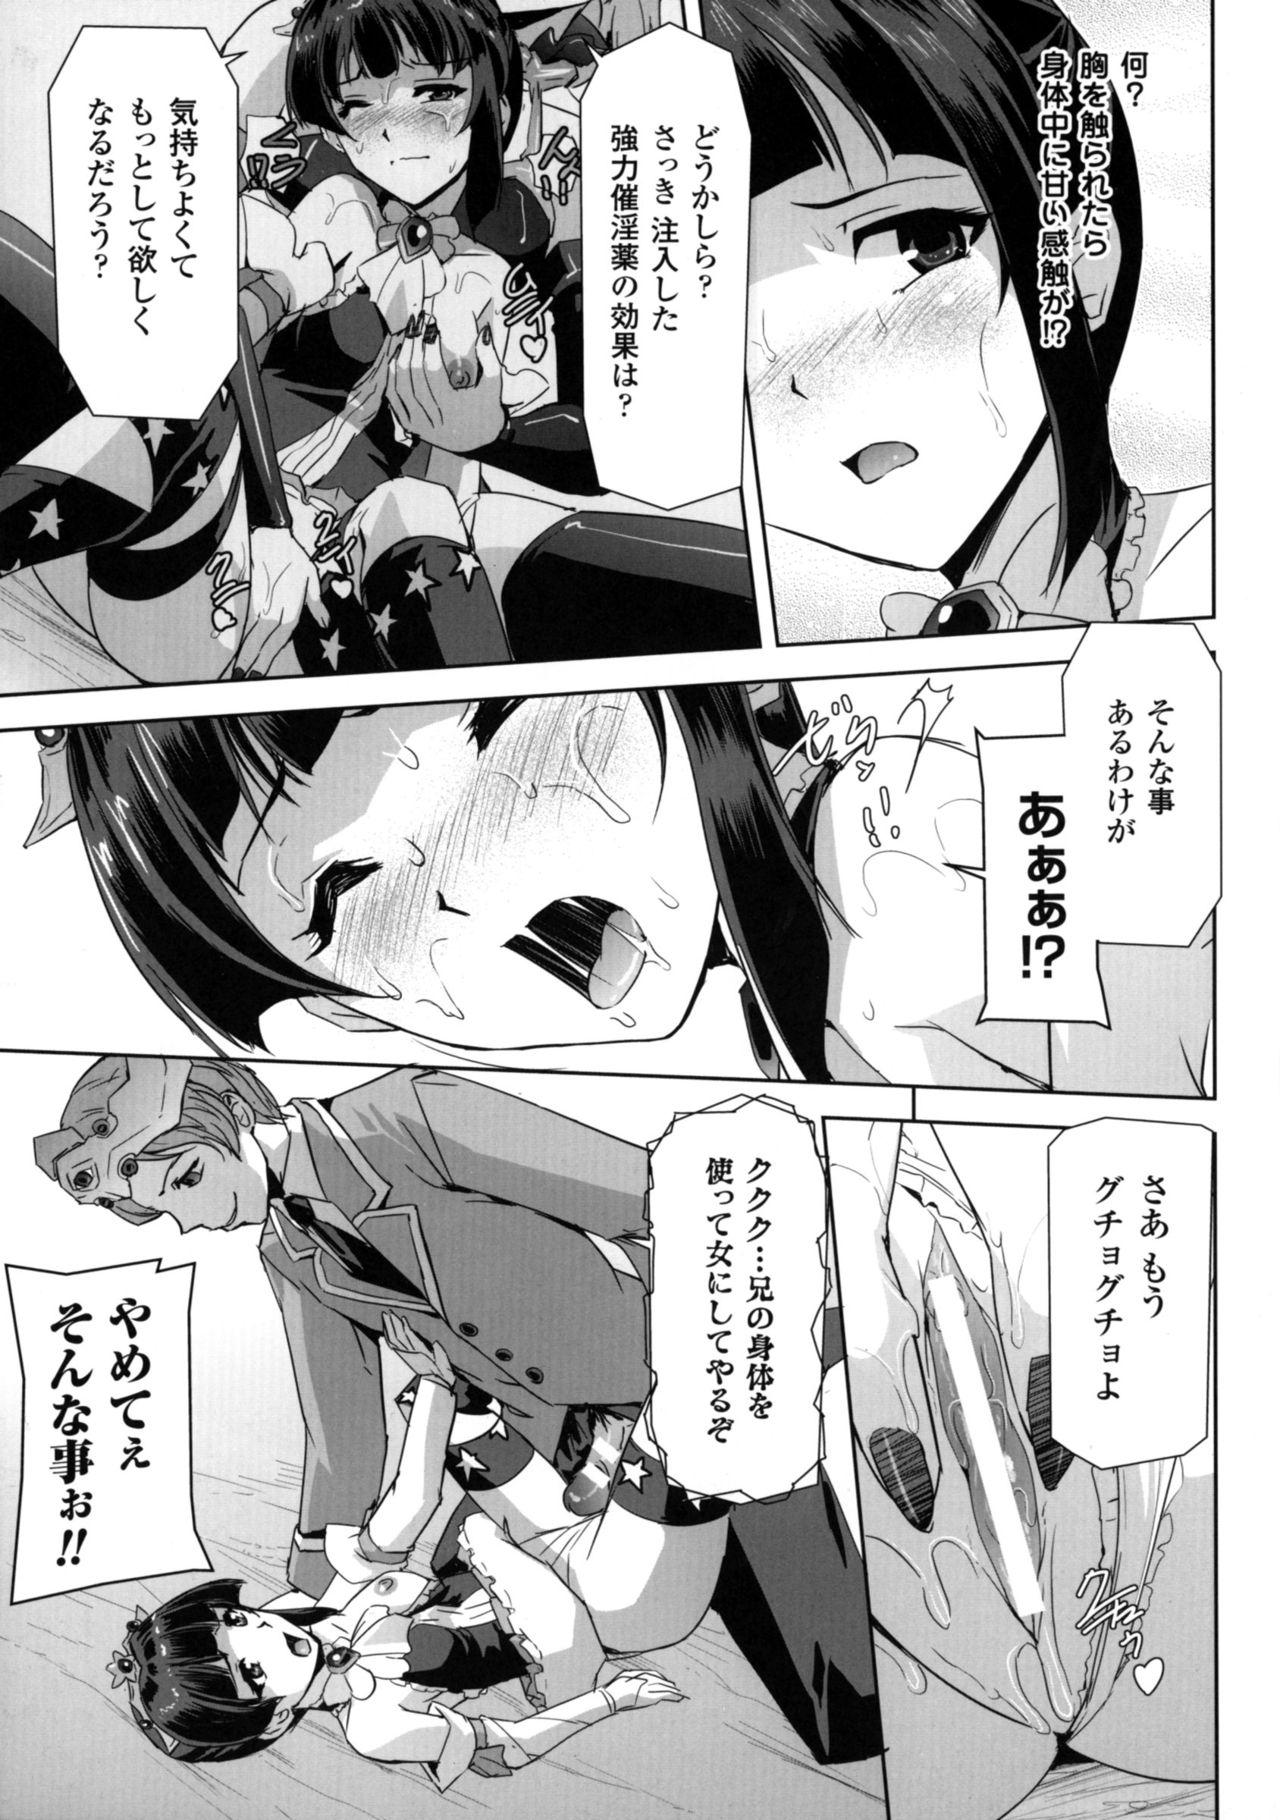 Seigi no Heroine Kangoku File DX Vol. 3 190